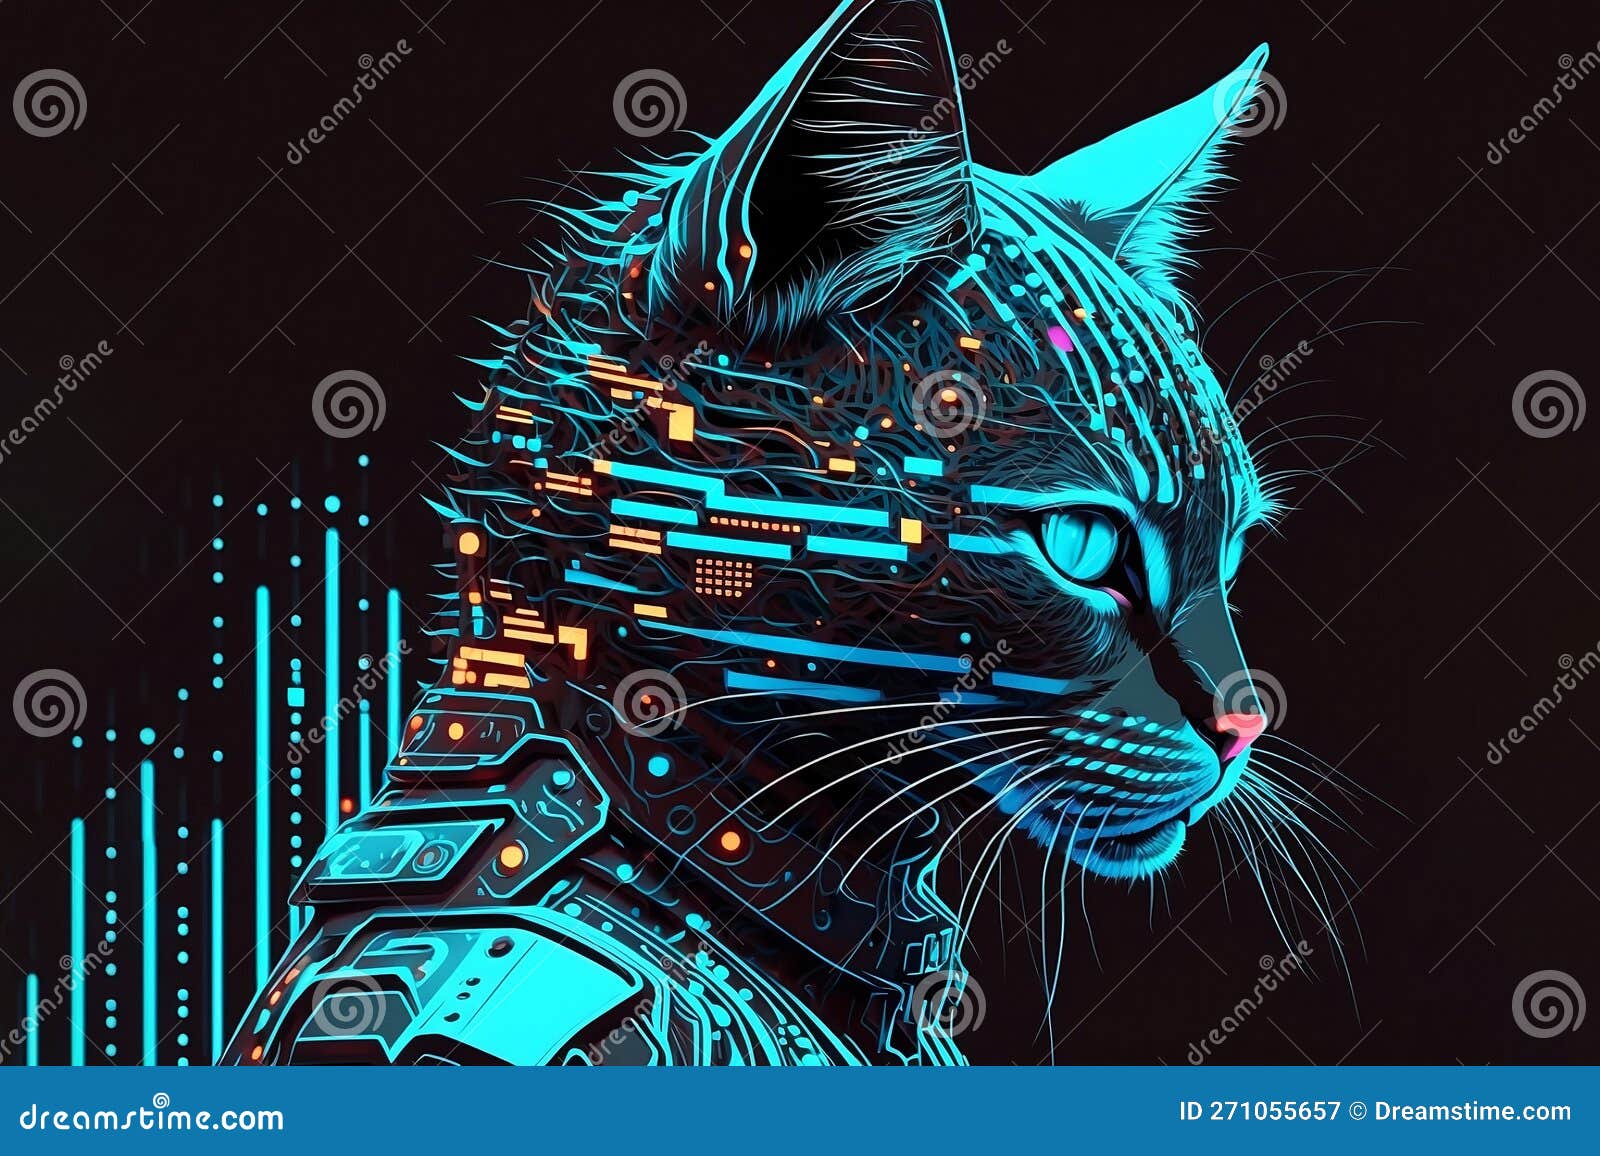 4K Wallpaper for PC: AI Cyberpunk Illustration